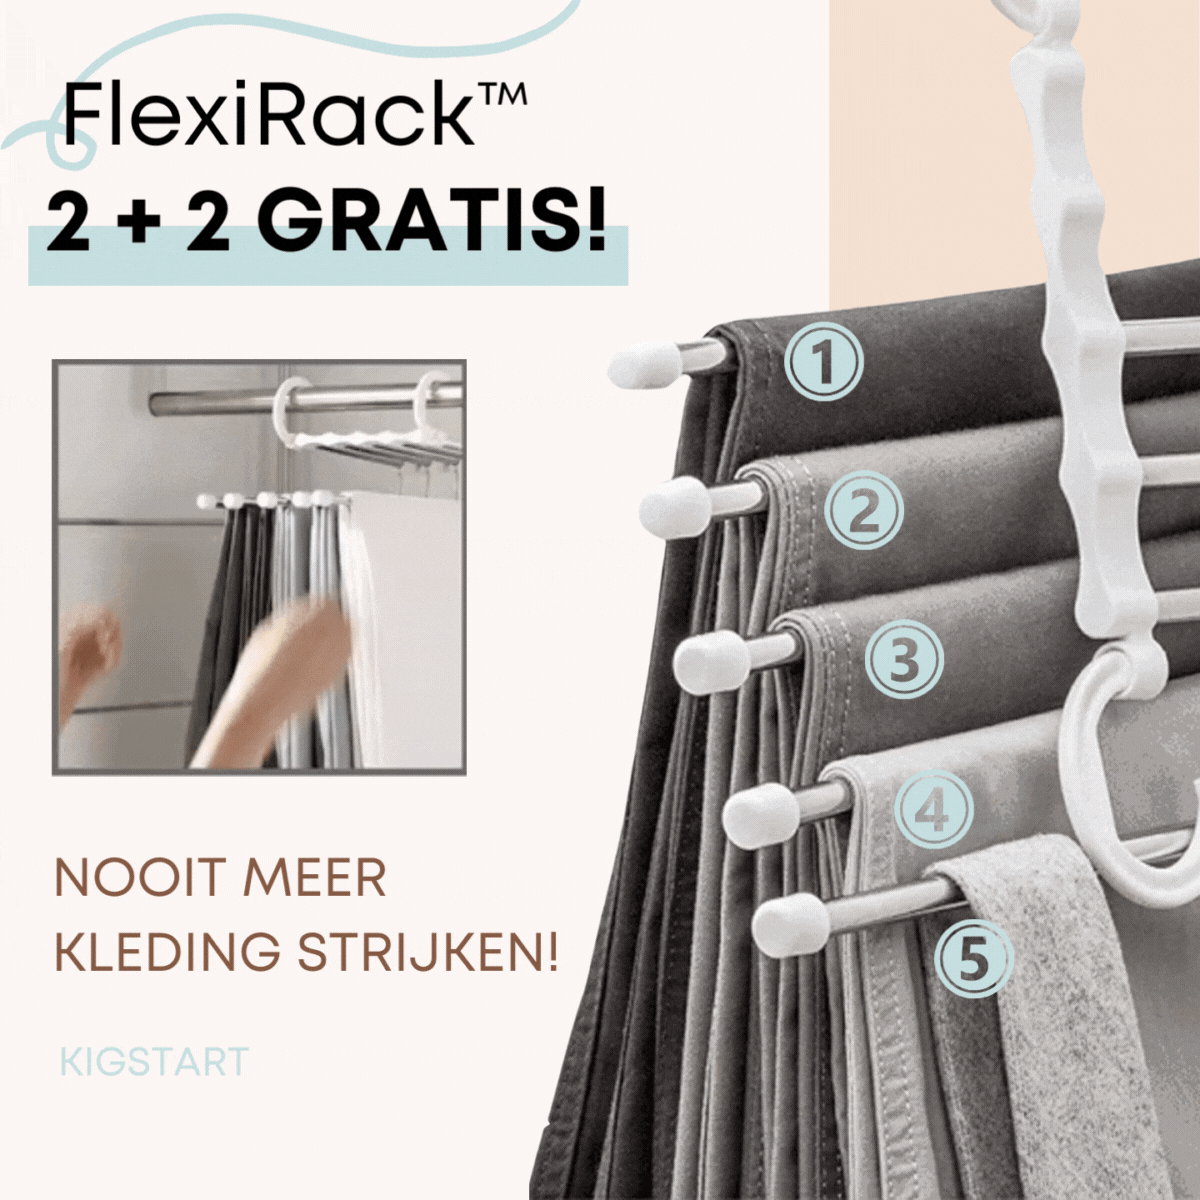 FlexiRack™ Garment Organizer - 2 + 2 GRATIS